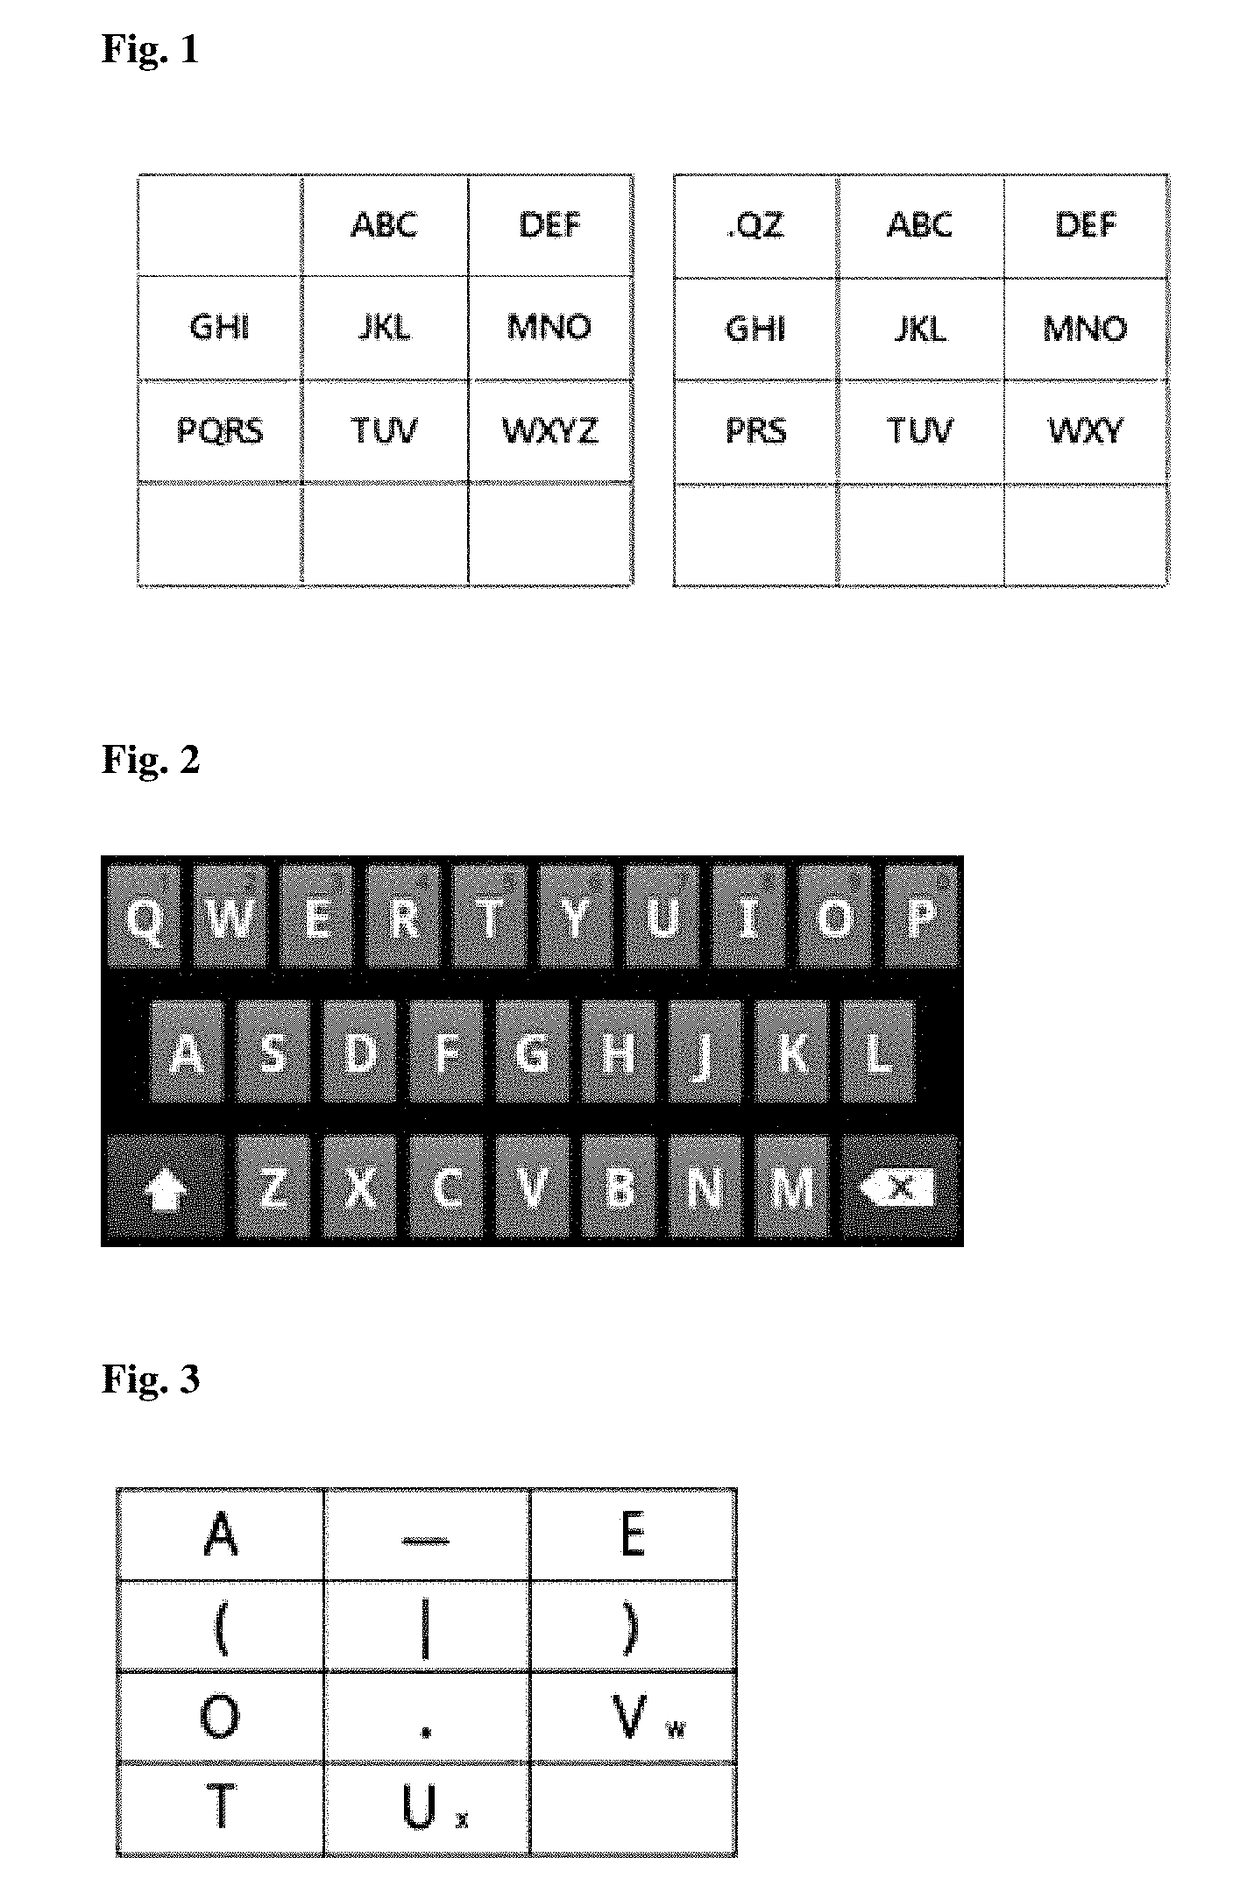 Alphabet input system